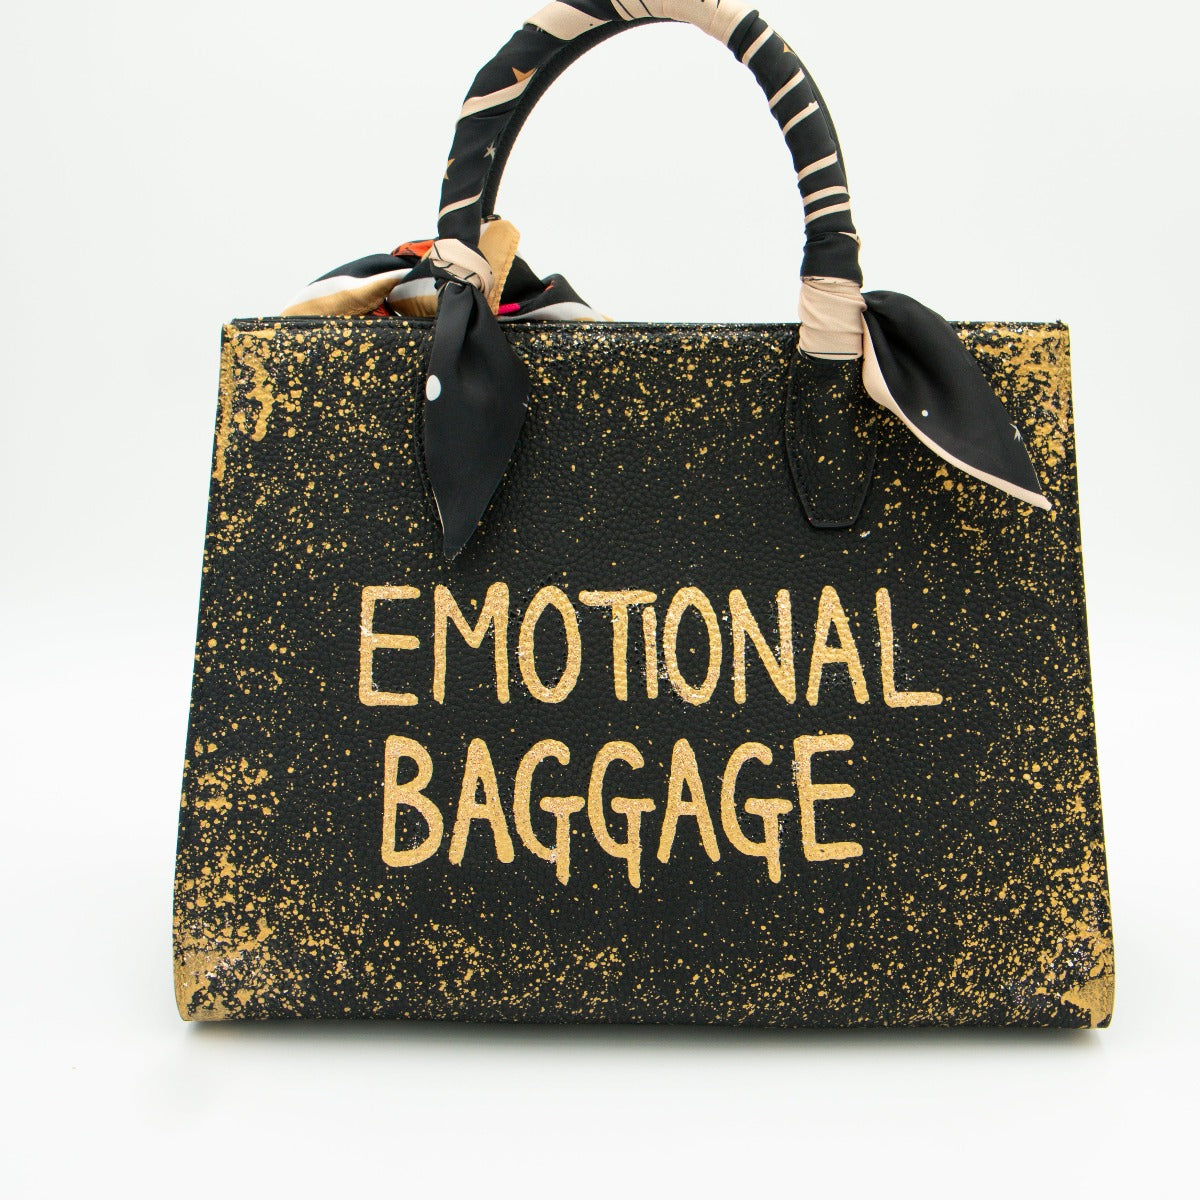 Anca Barbu Sophia Bag, Emotional Baggage, Gold